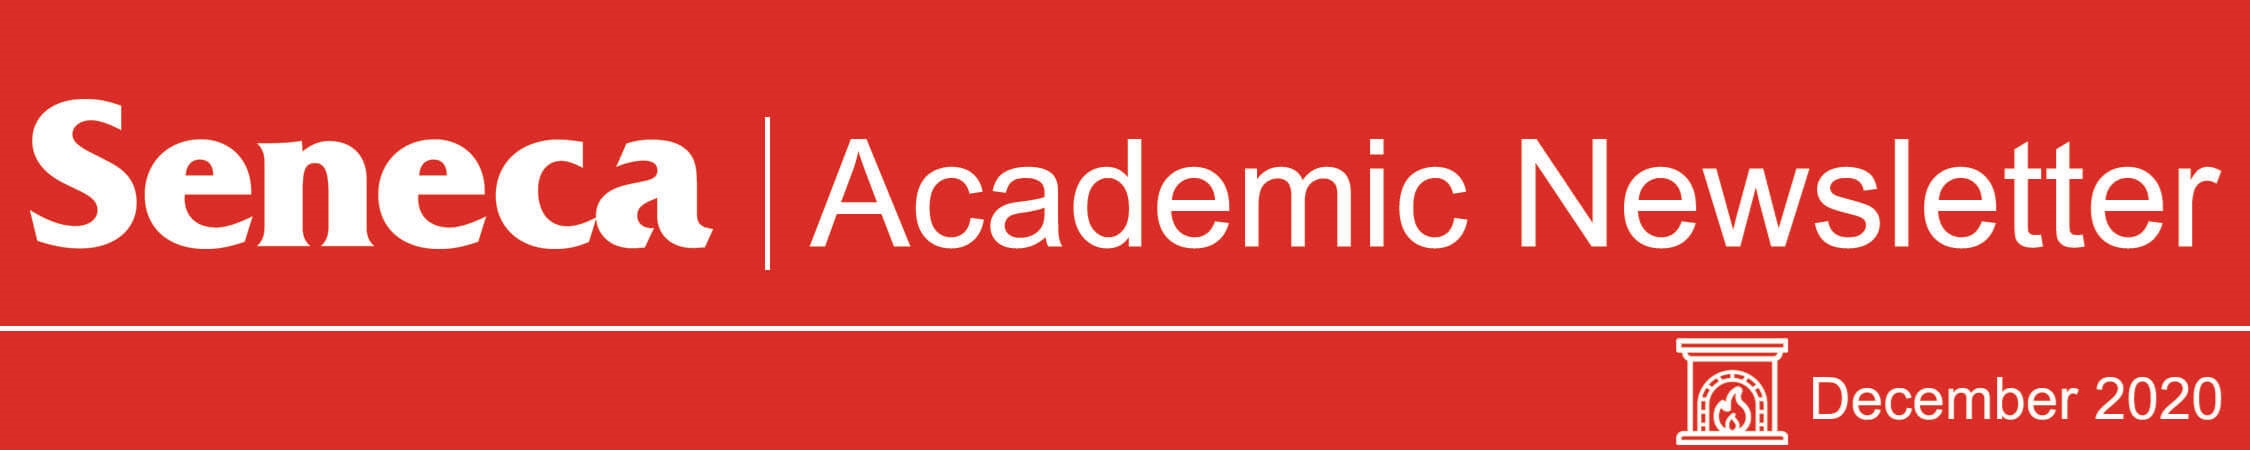 The header logo for the December 2020 issue of the Academic Newsletter